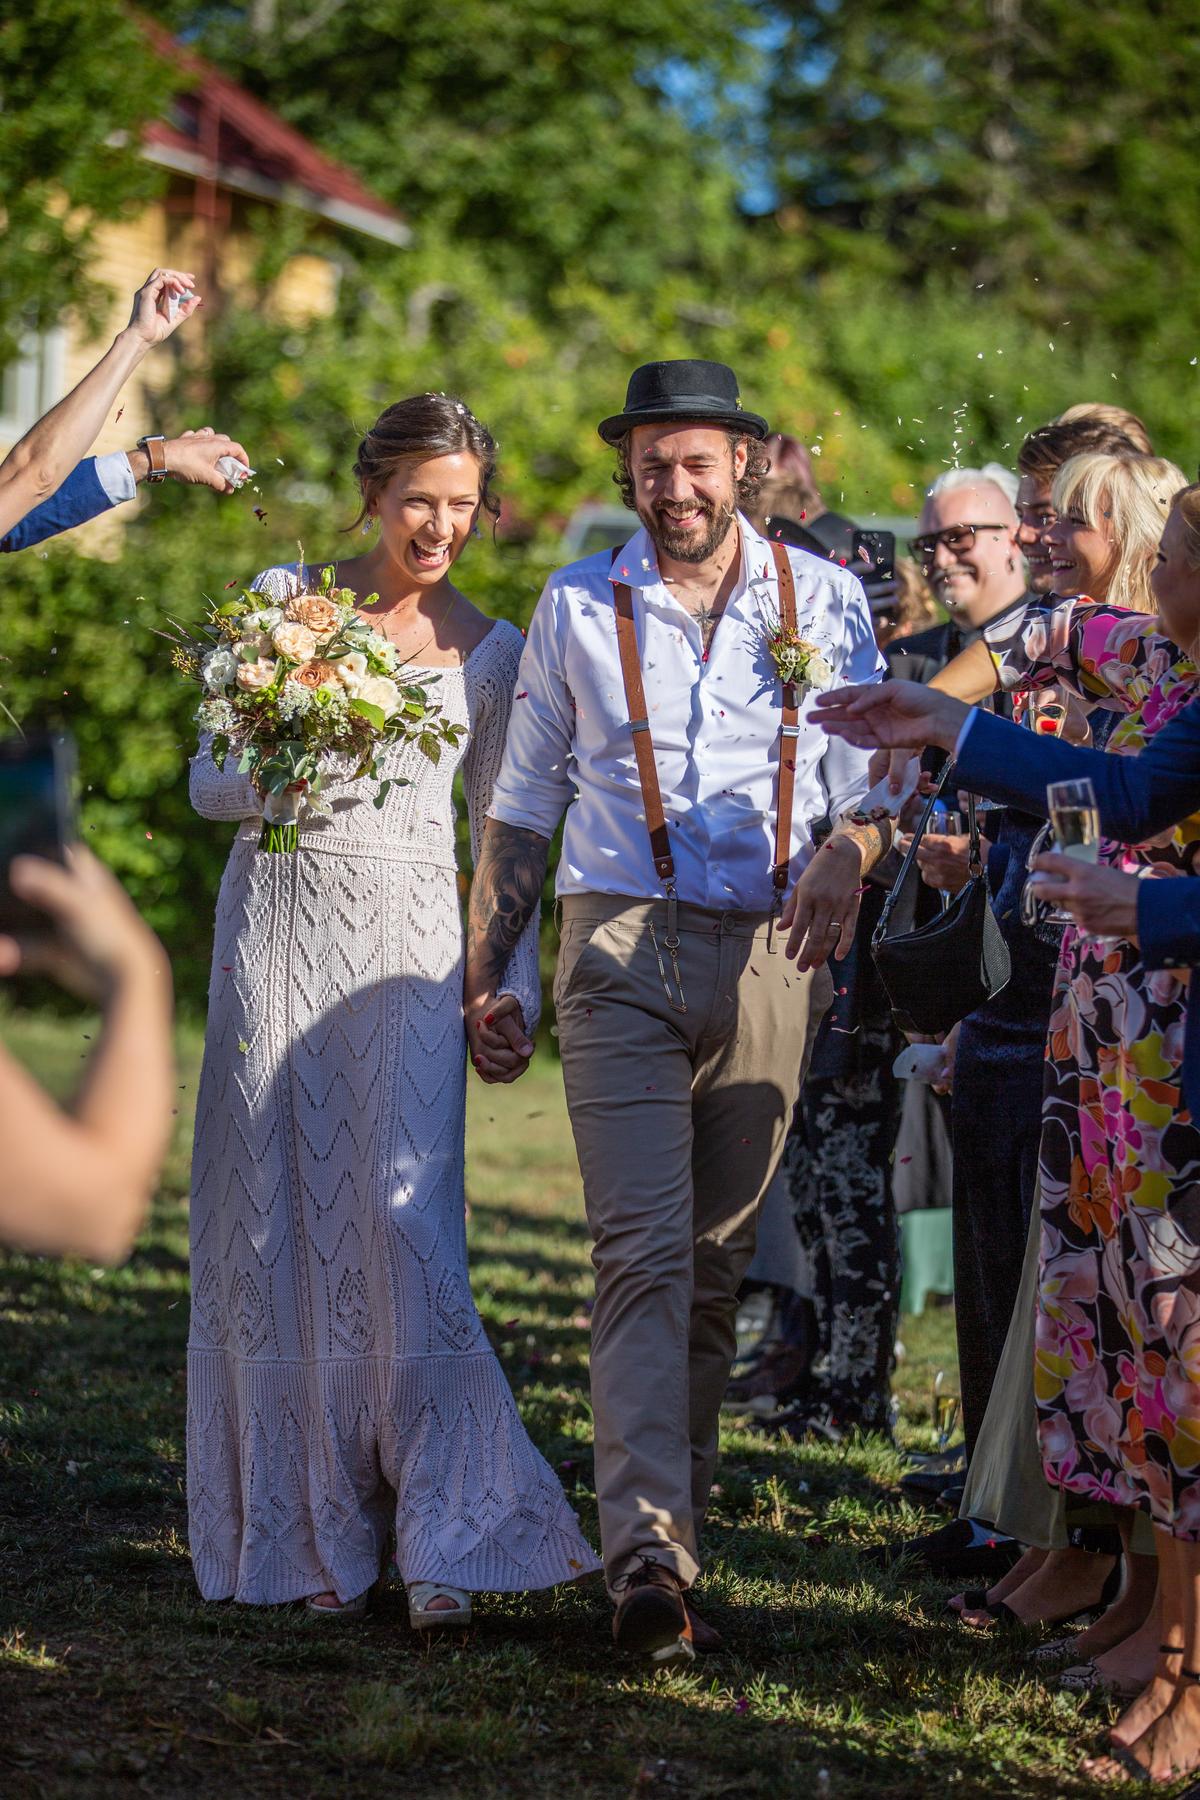 Veronika Lindberg and her husband celebrating among family and friends on their wedding day. (Courtesy of Jonas Kukkonen)